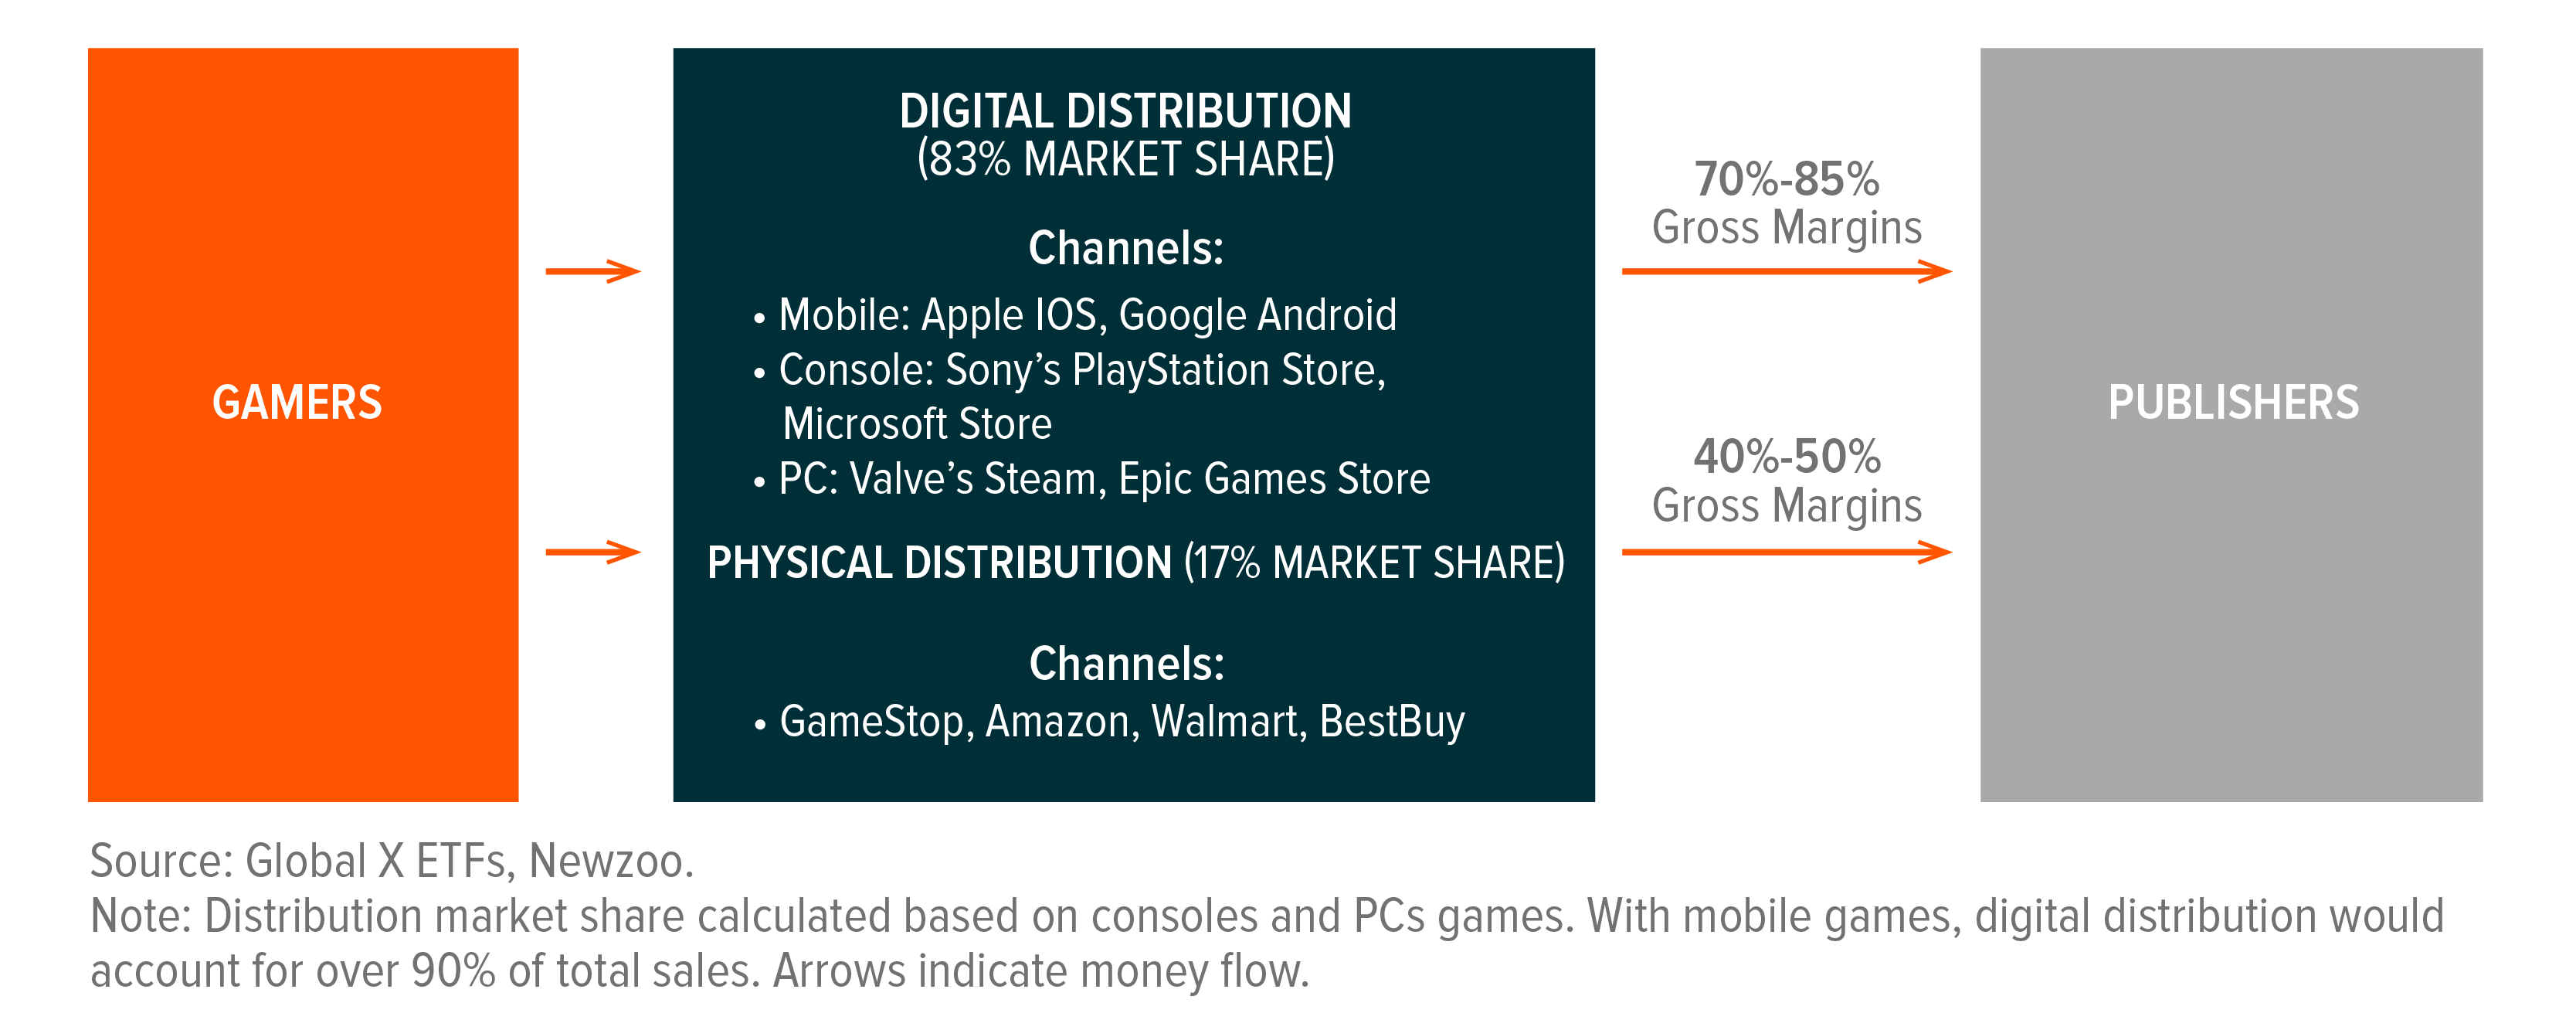 Digital distribution of video games